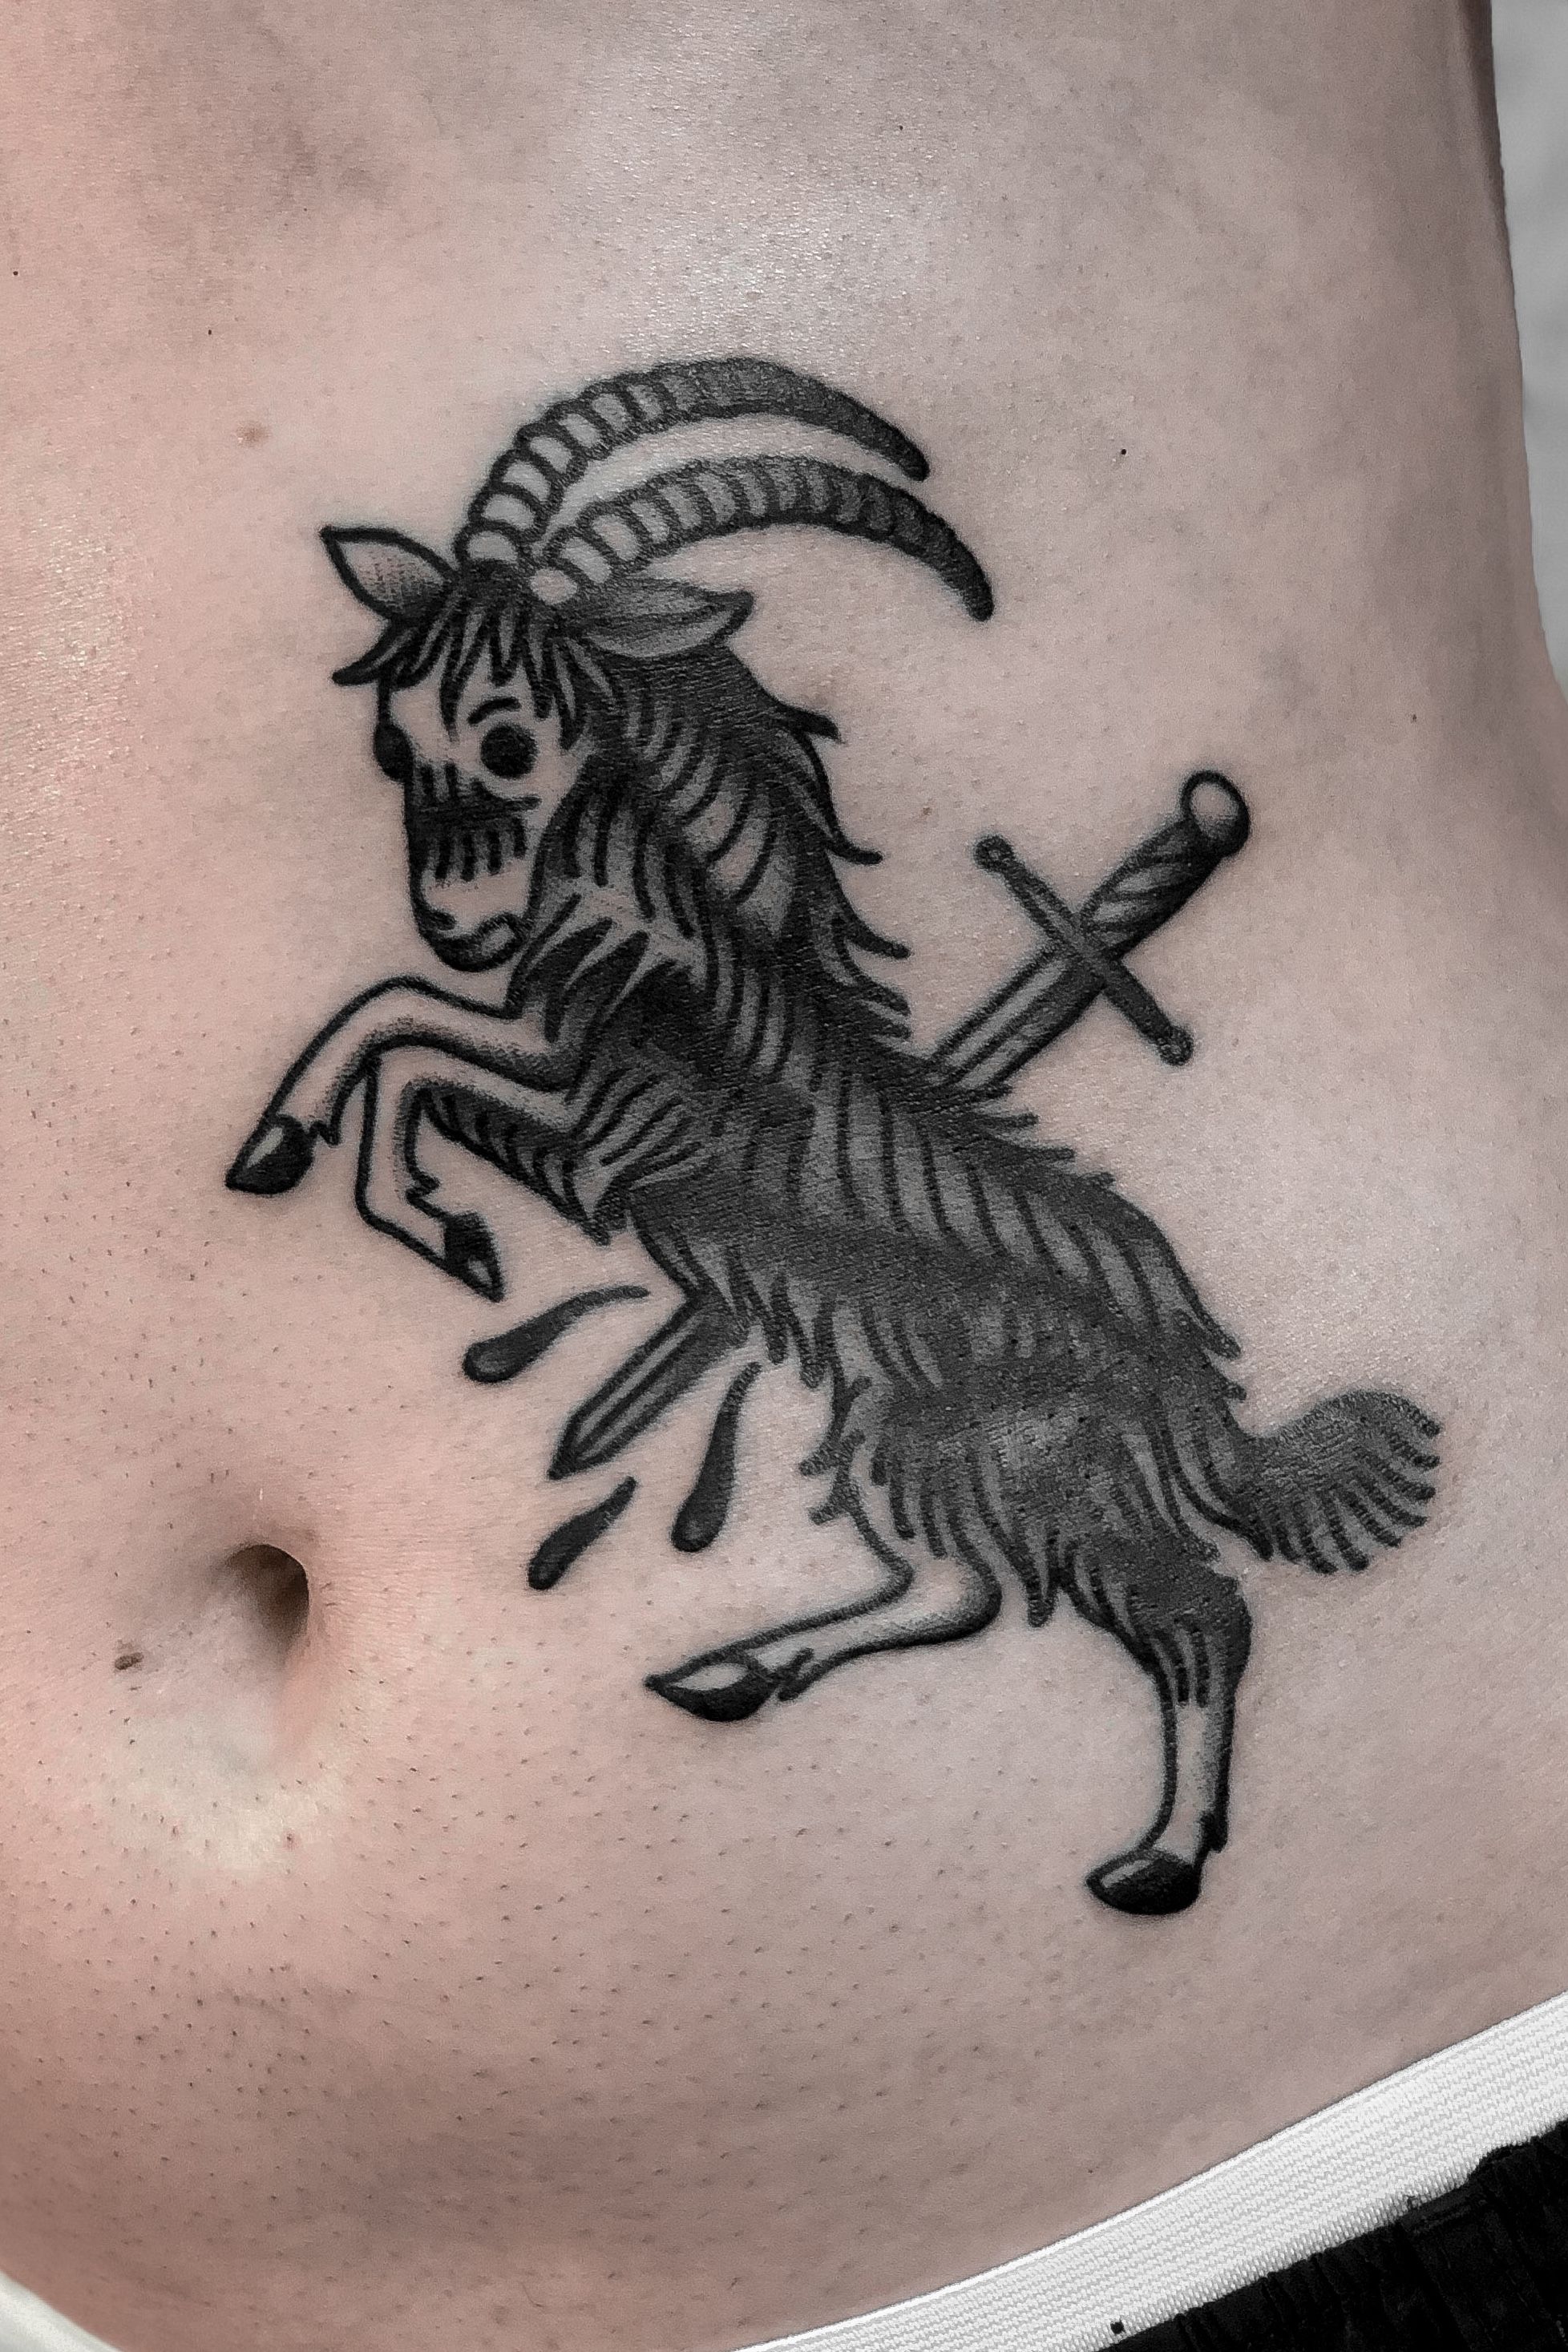 Goat tattoo design : r/doodles